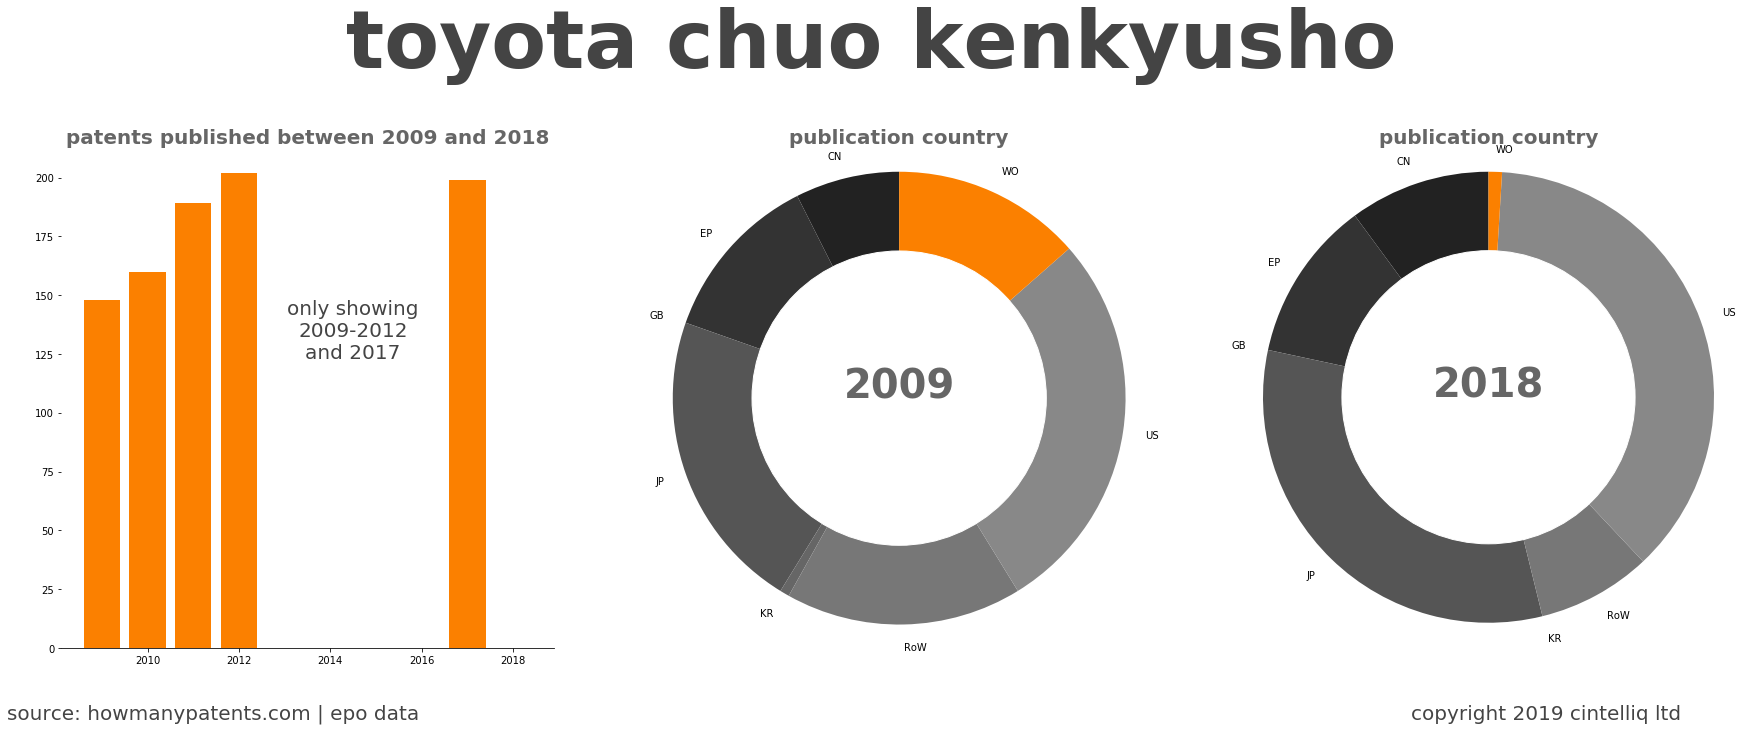 summary of patents for Toyota Chuo Kenkyusho